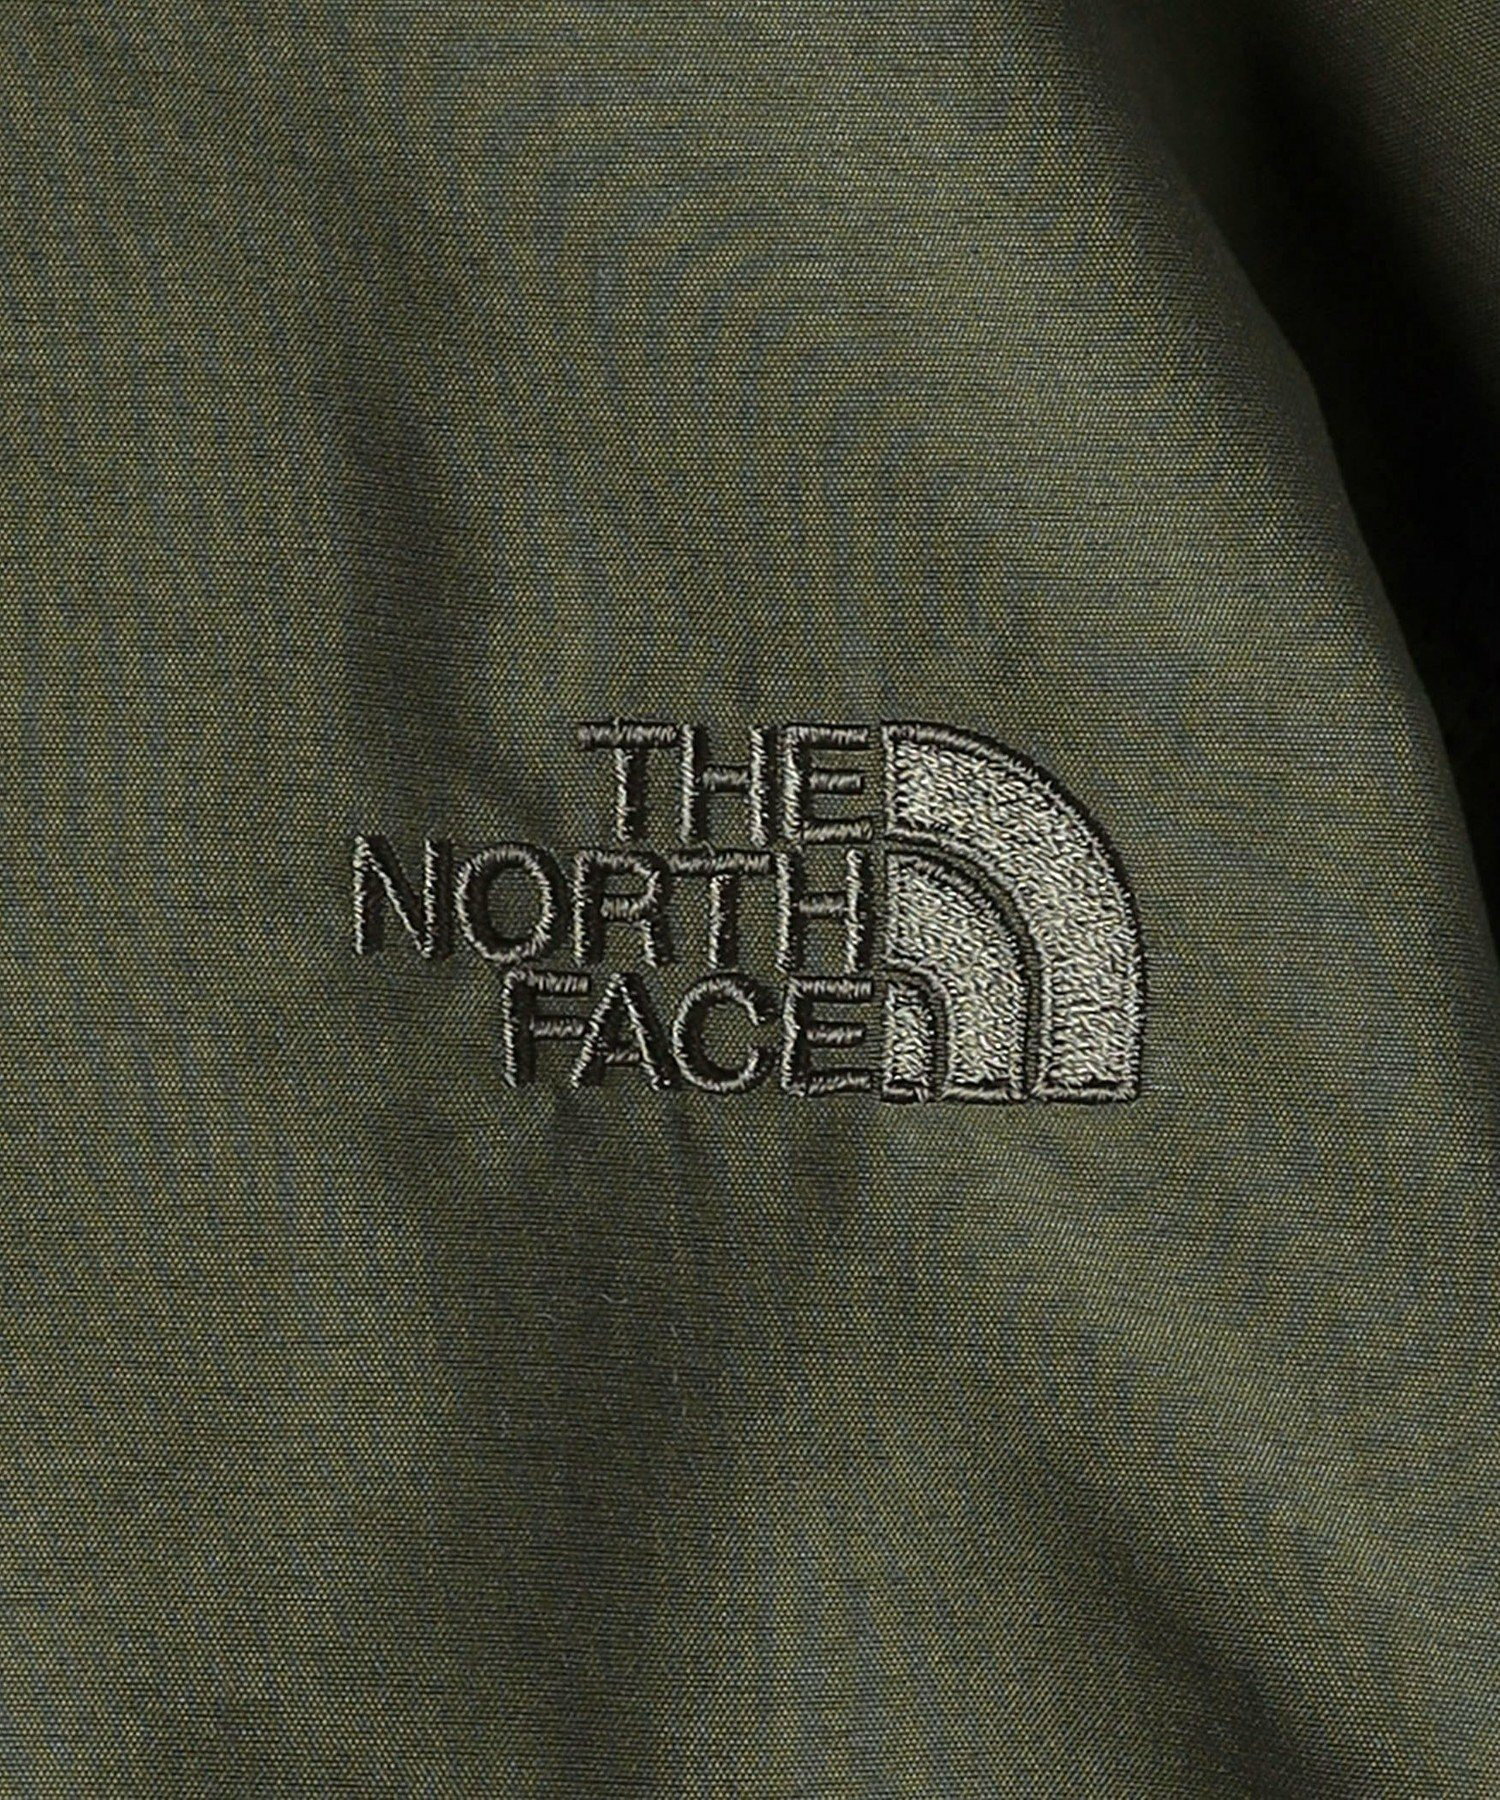 <THE NORTH FACE>コンパクト ジャケット -ウォッシャブル-